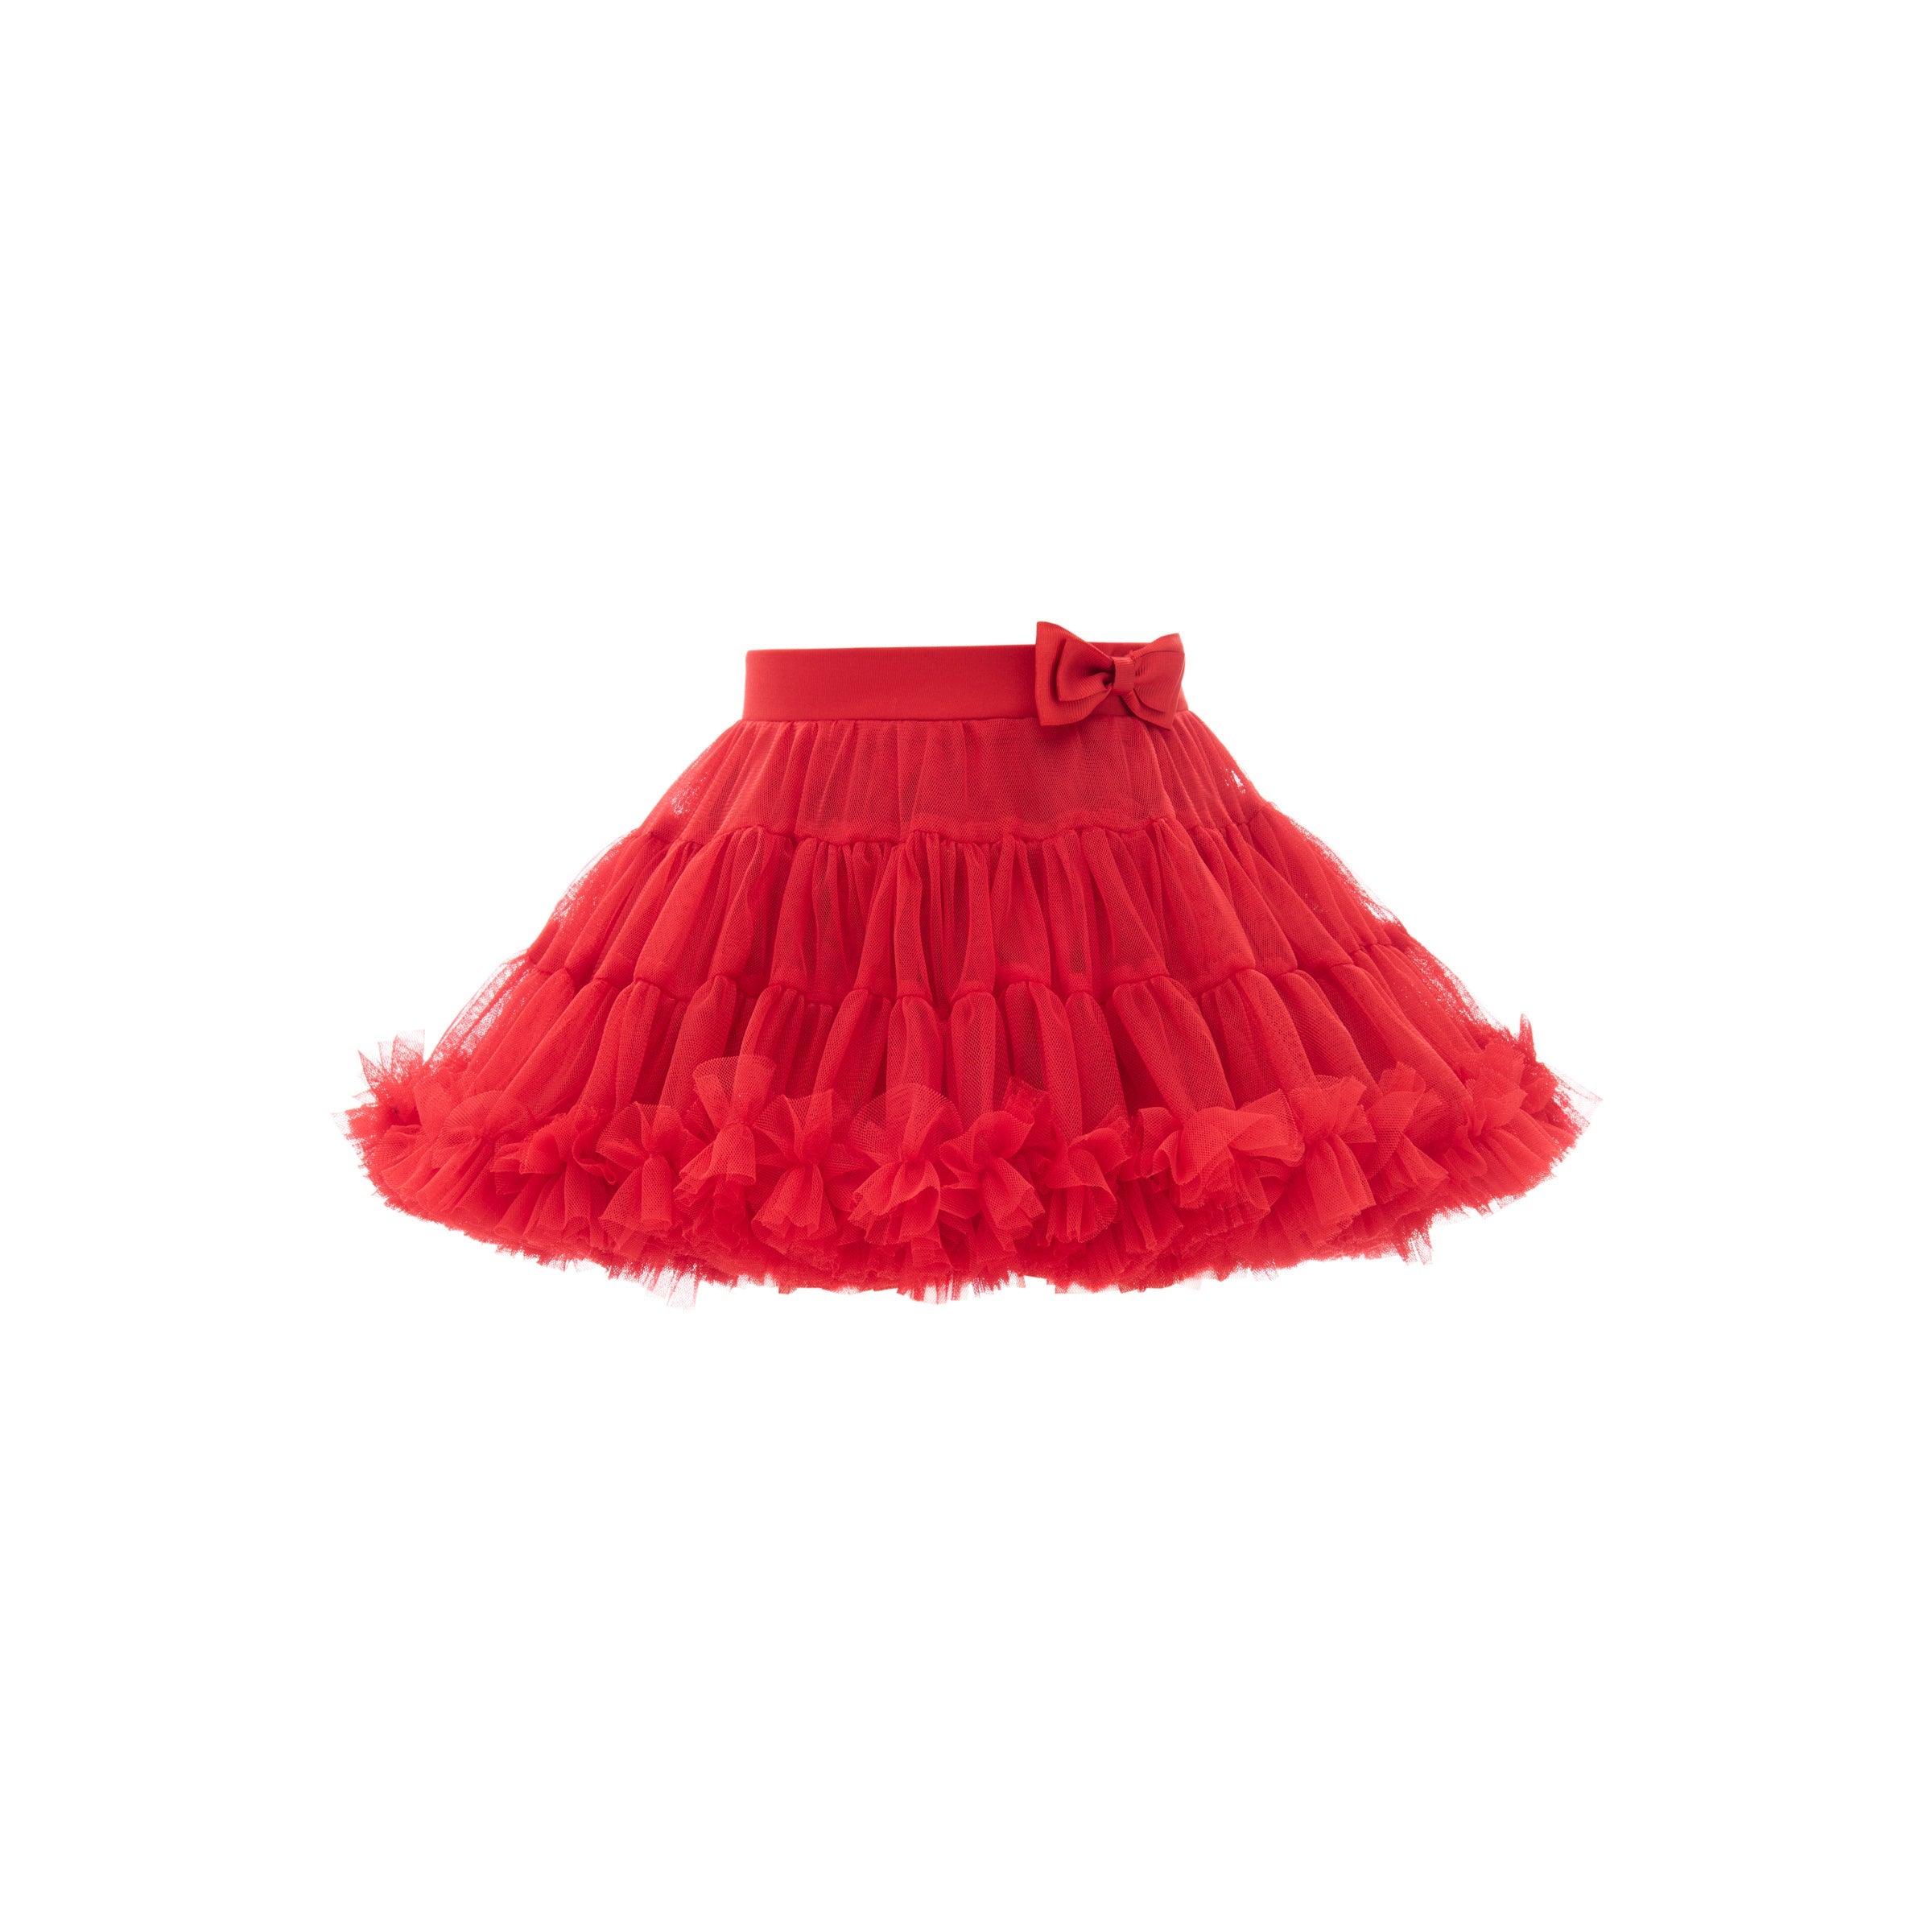 kids-atelier-mimi-tutu-kid-baby-girl-red-bow-tutu-skirt-t-01-red